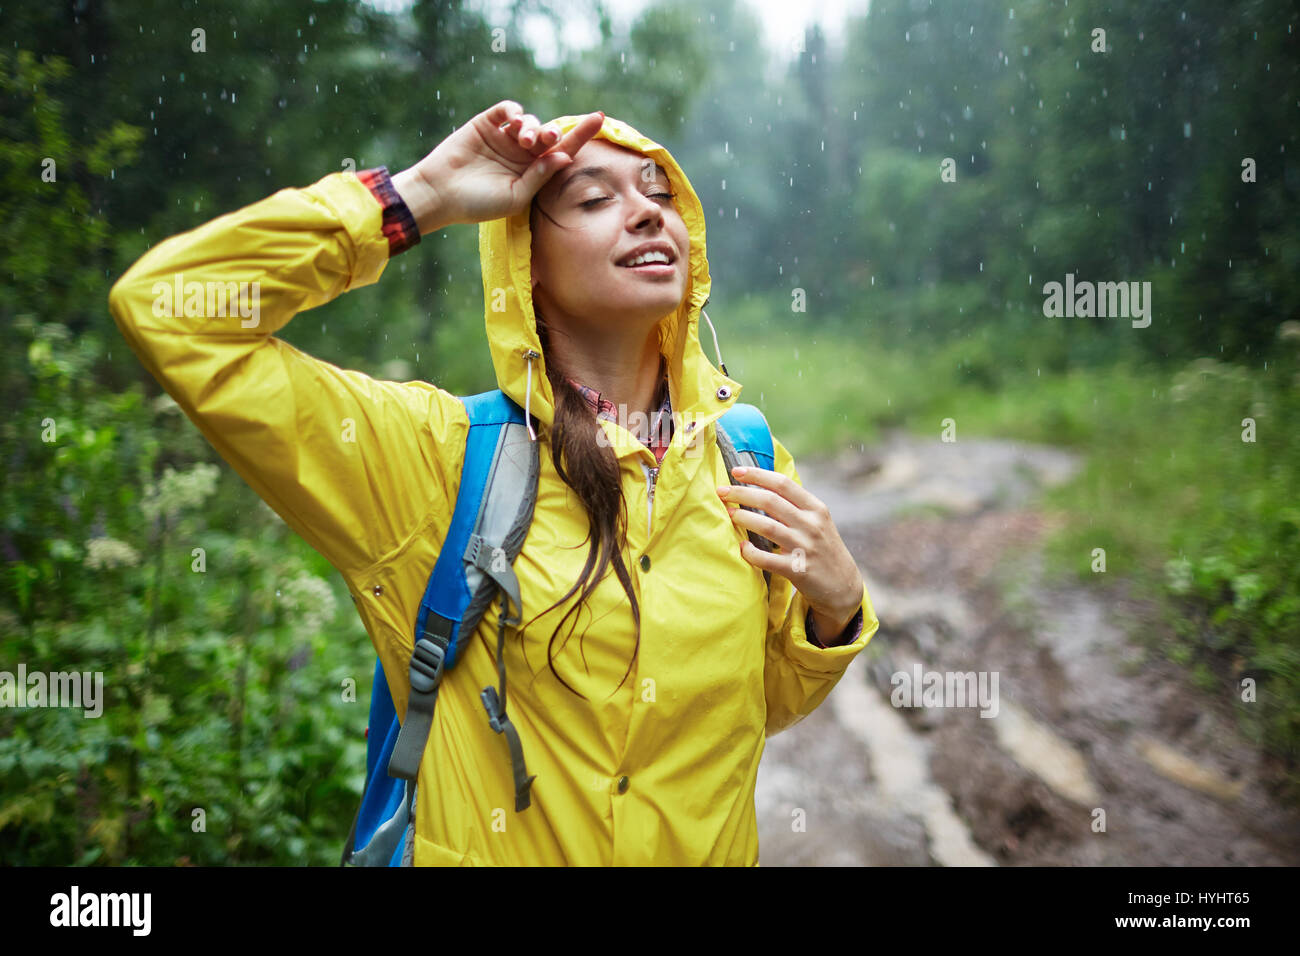 Rain pleasure Stock Photo